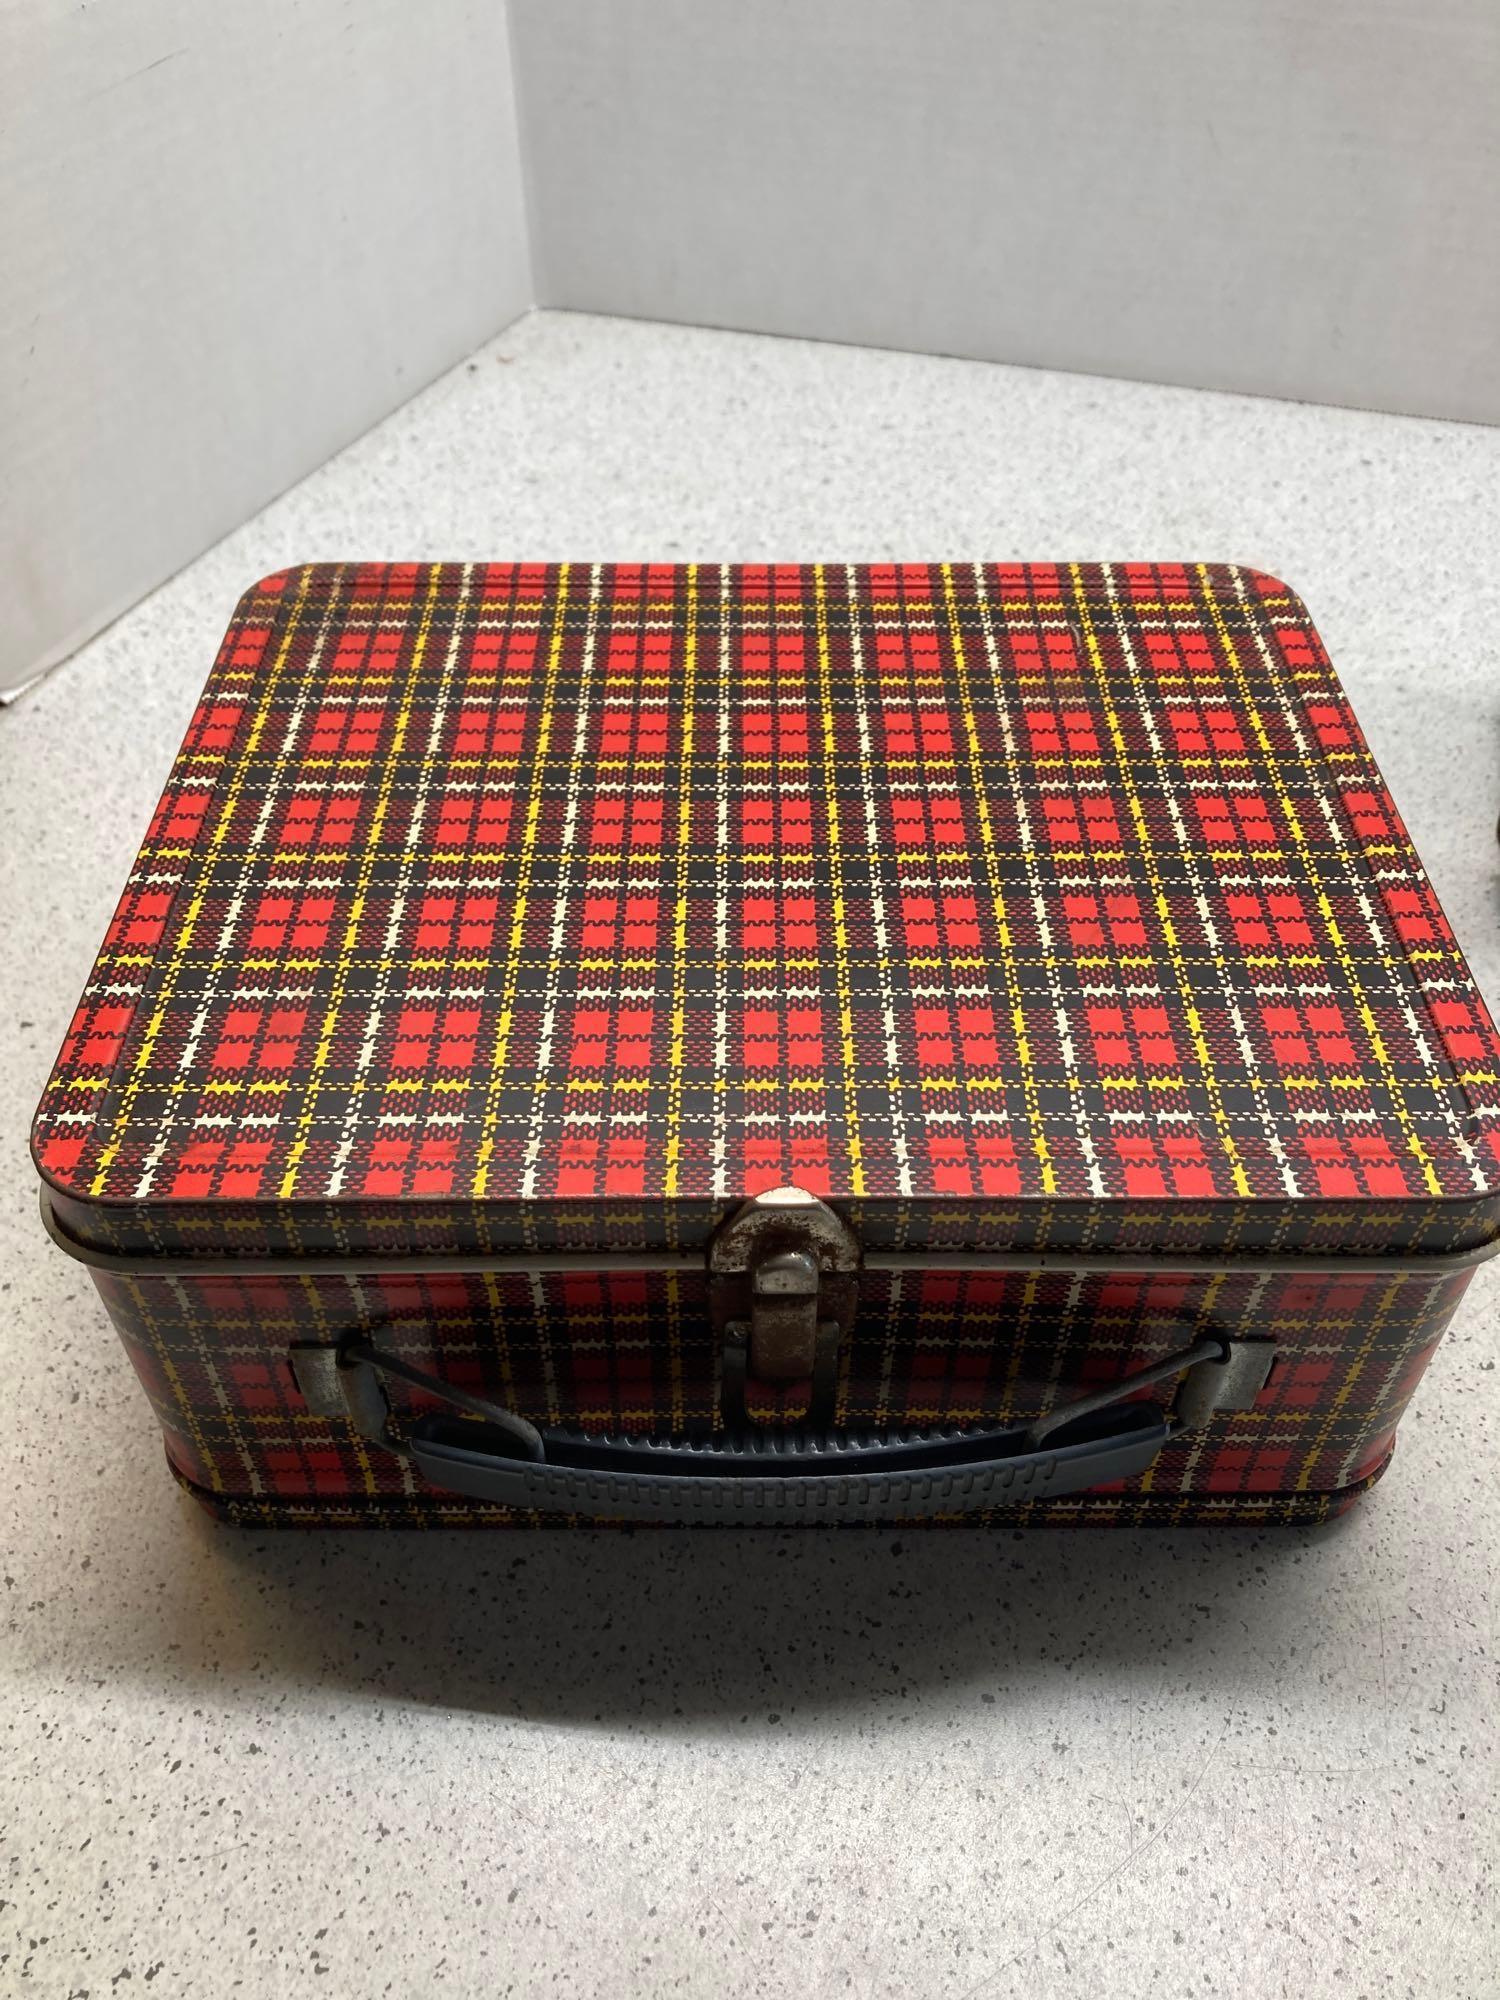 5 vintage lunchboxes